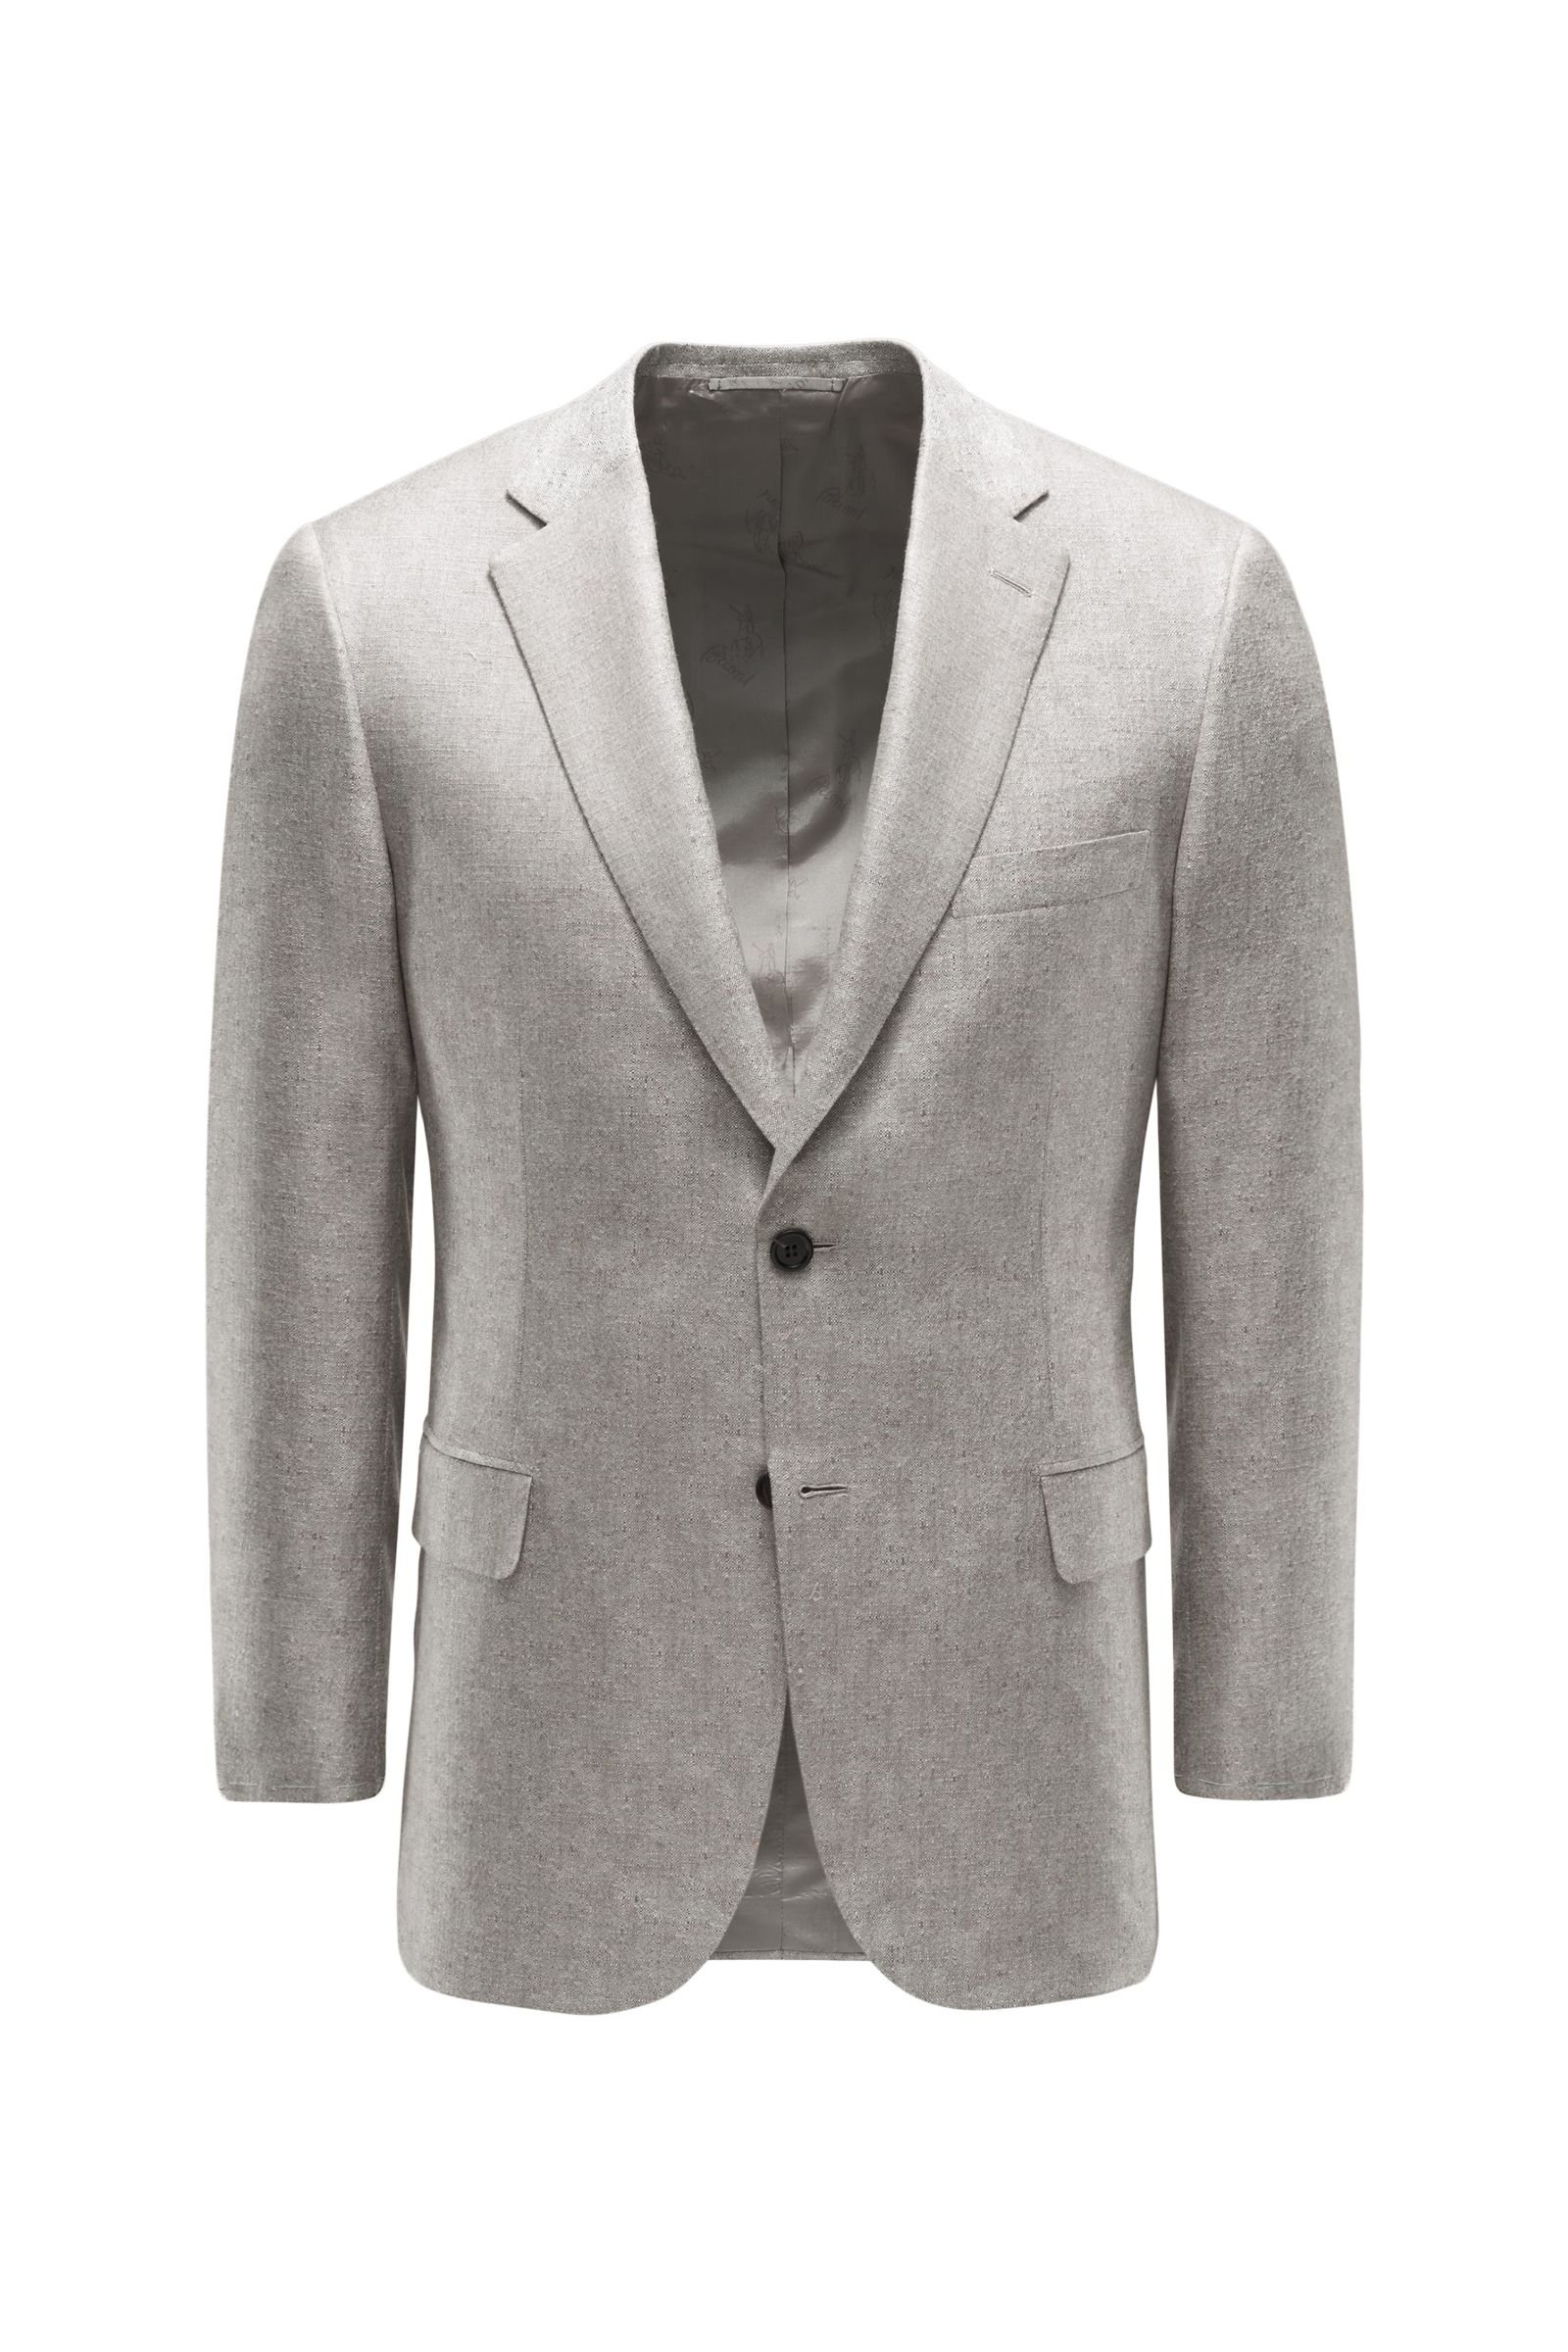 Smart-casual jacket 'Brunico' light grey